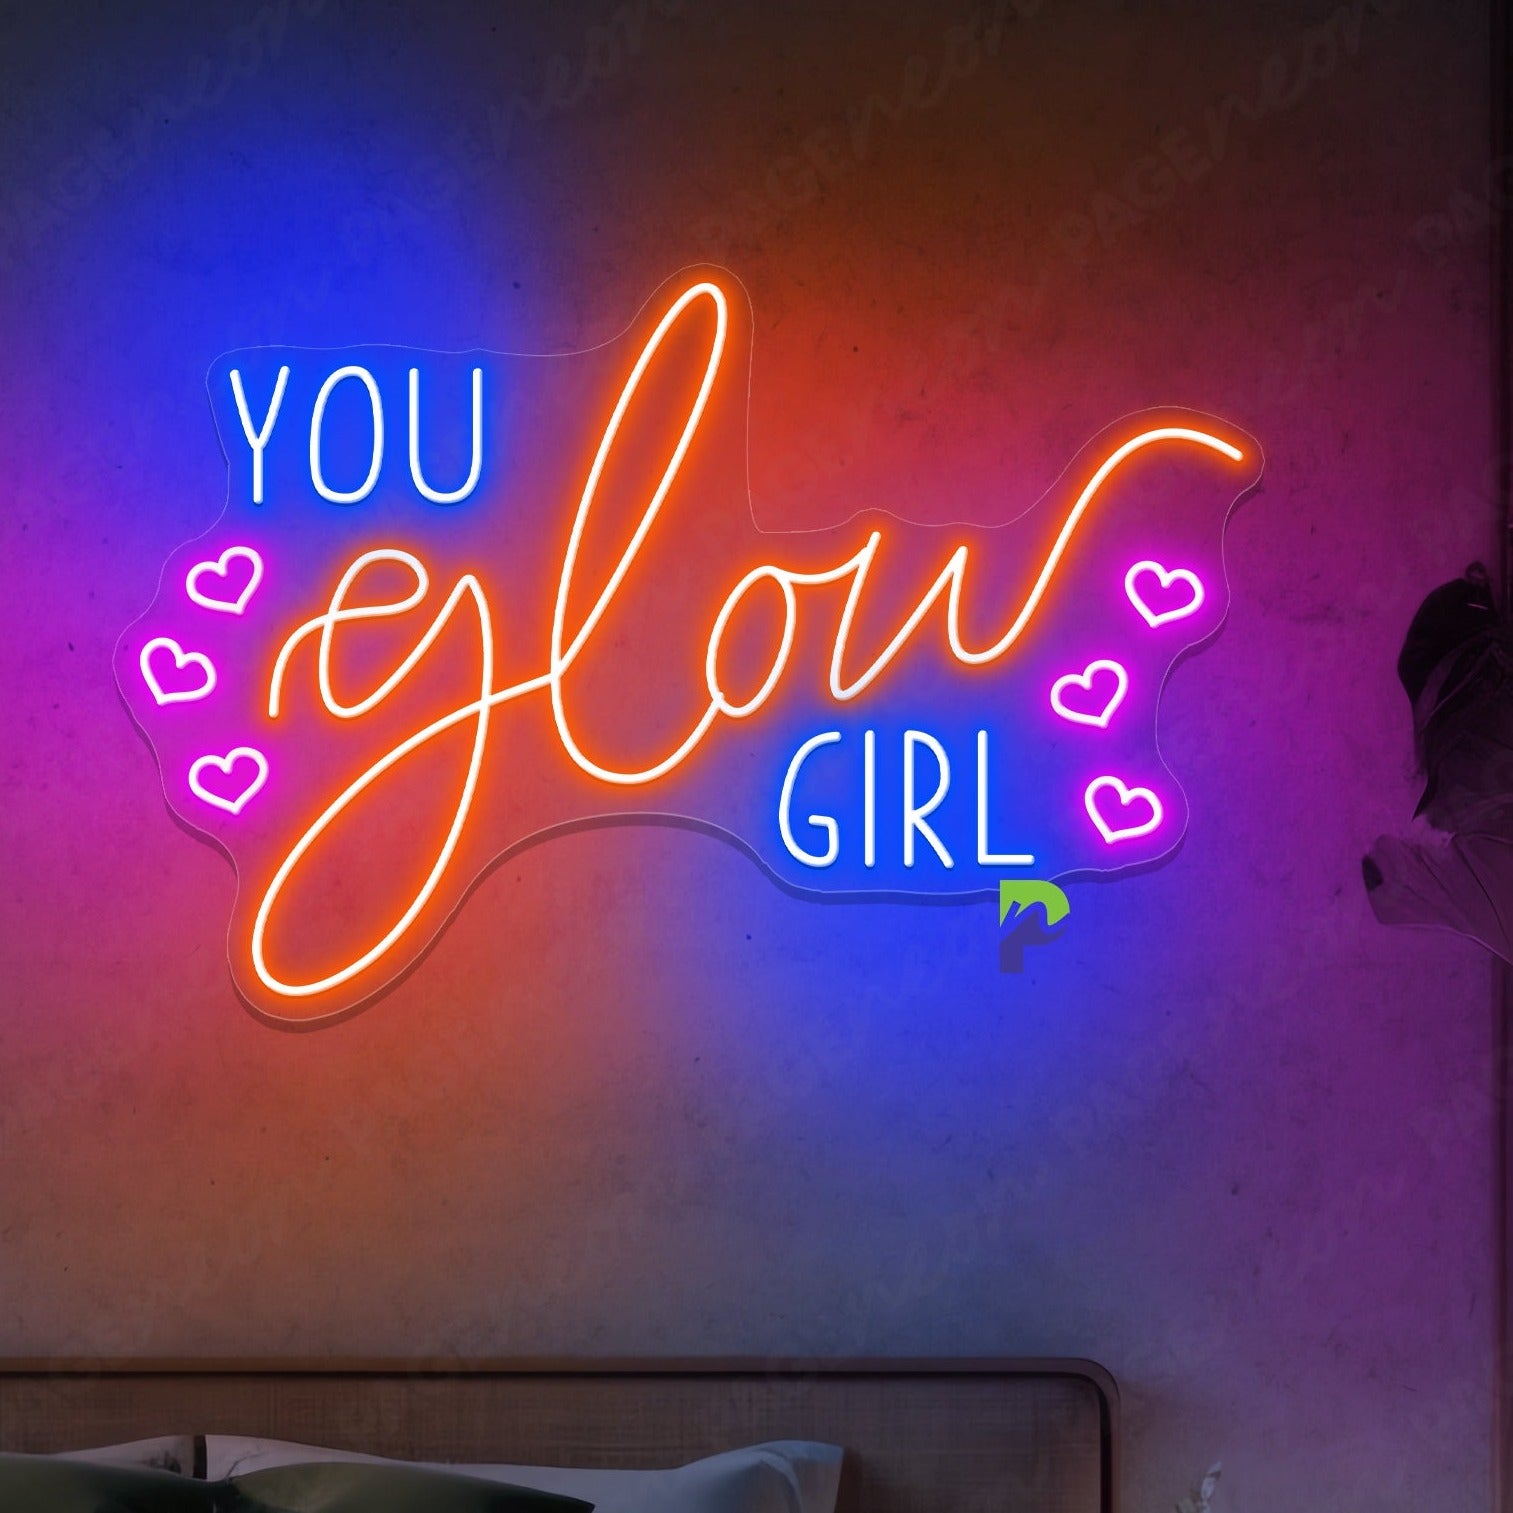 You Glow Girl Neon Sign Inspirational Led Light